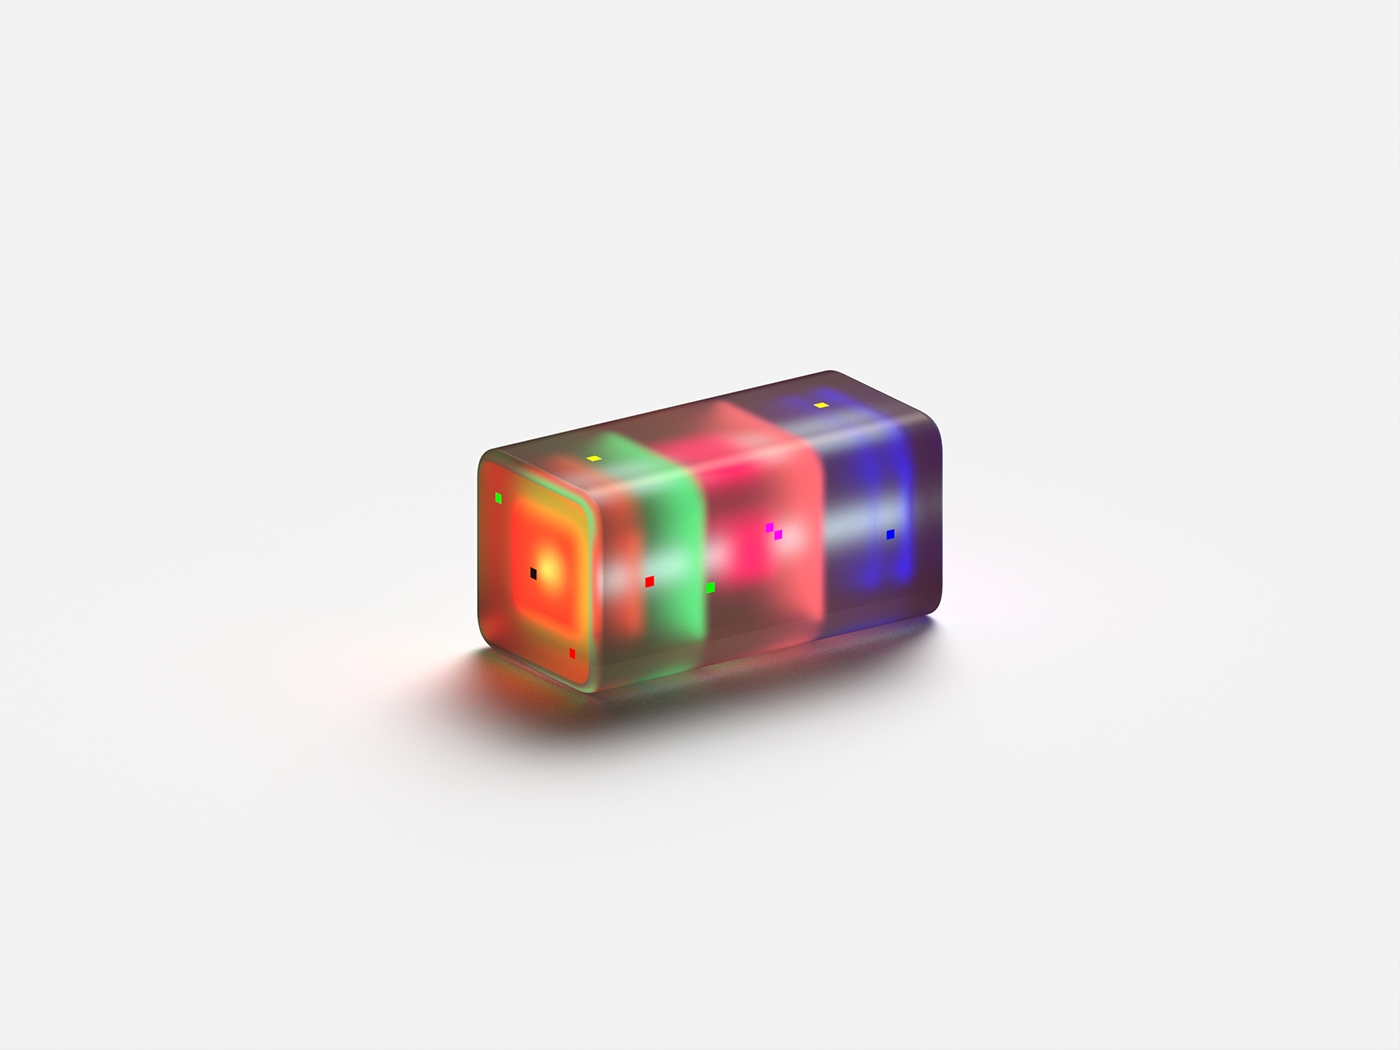 speculative LEGO shape geometry color keyshot rendering 3D fiction concept material texture